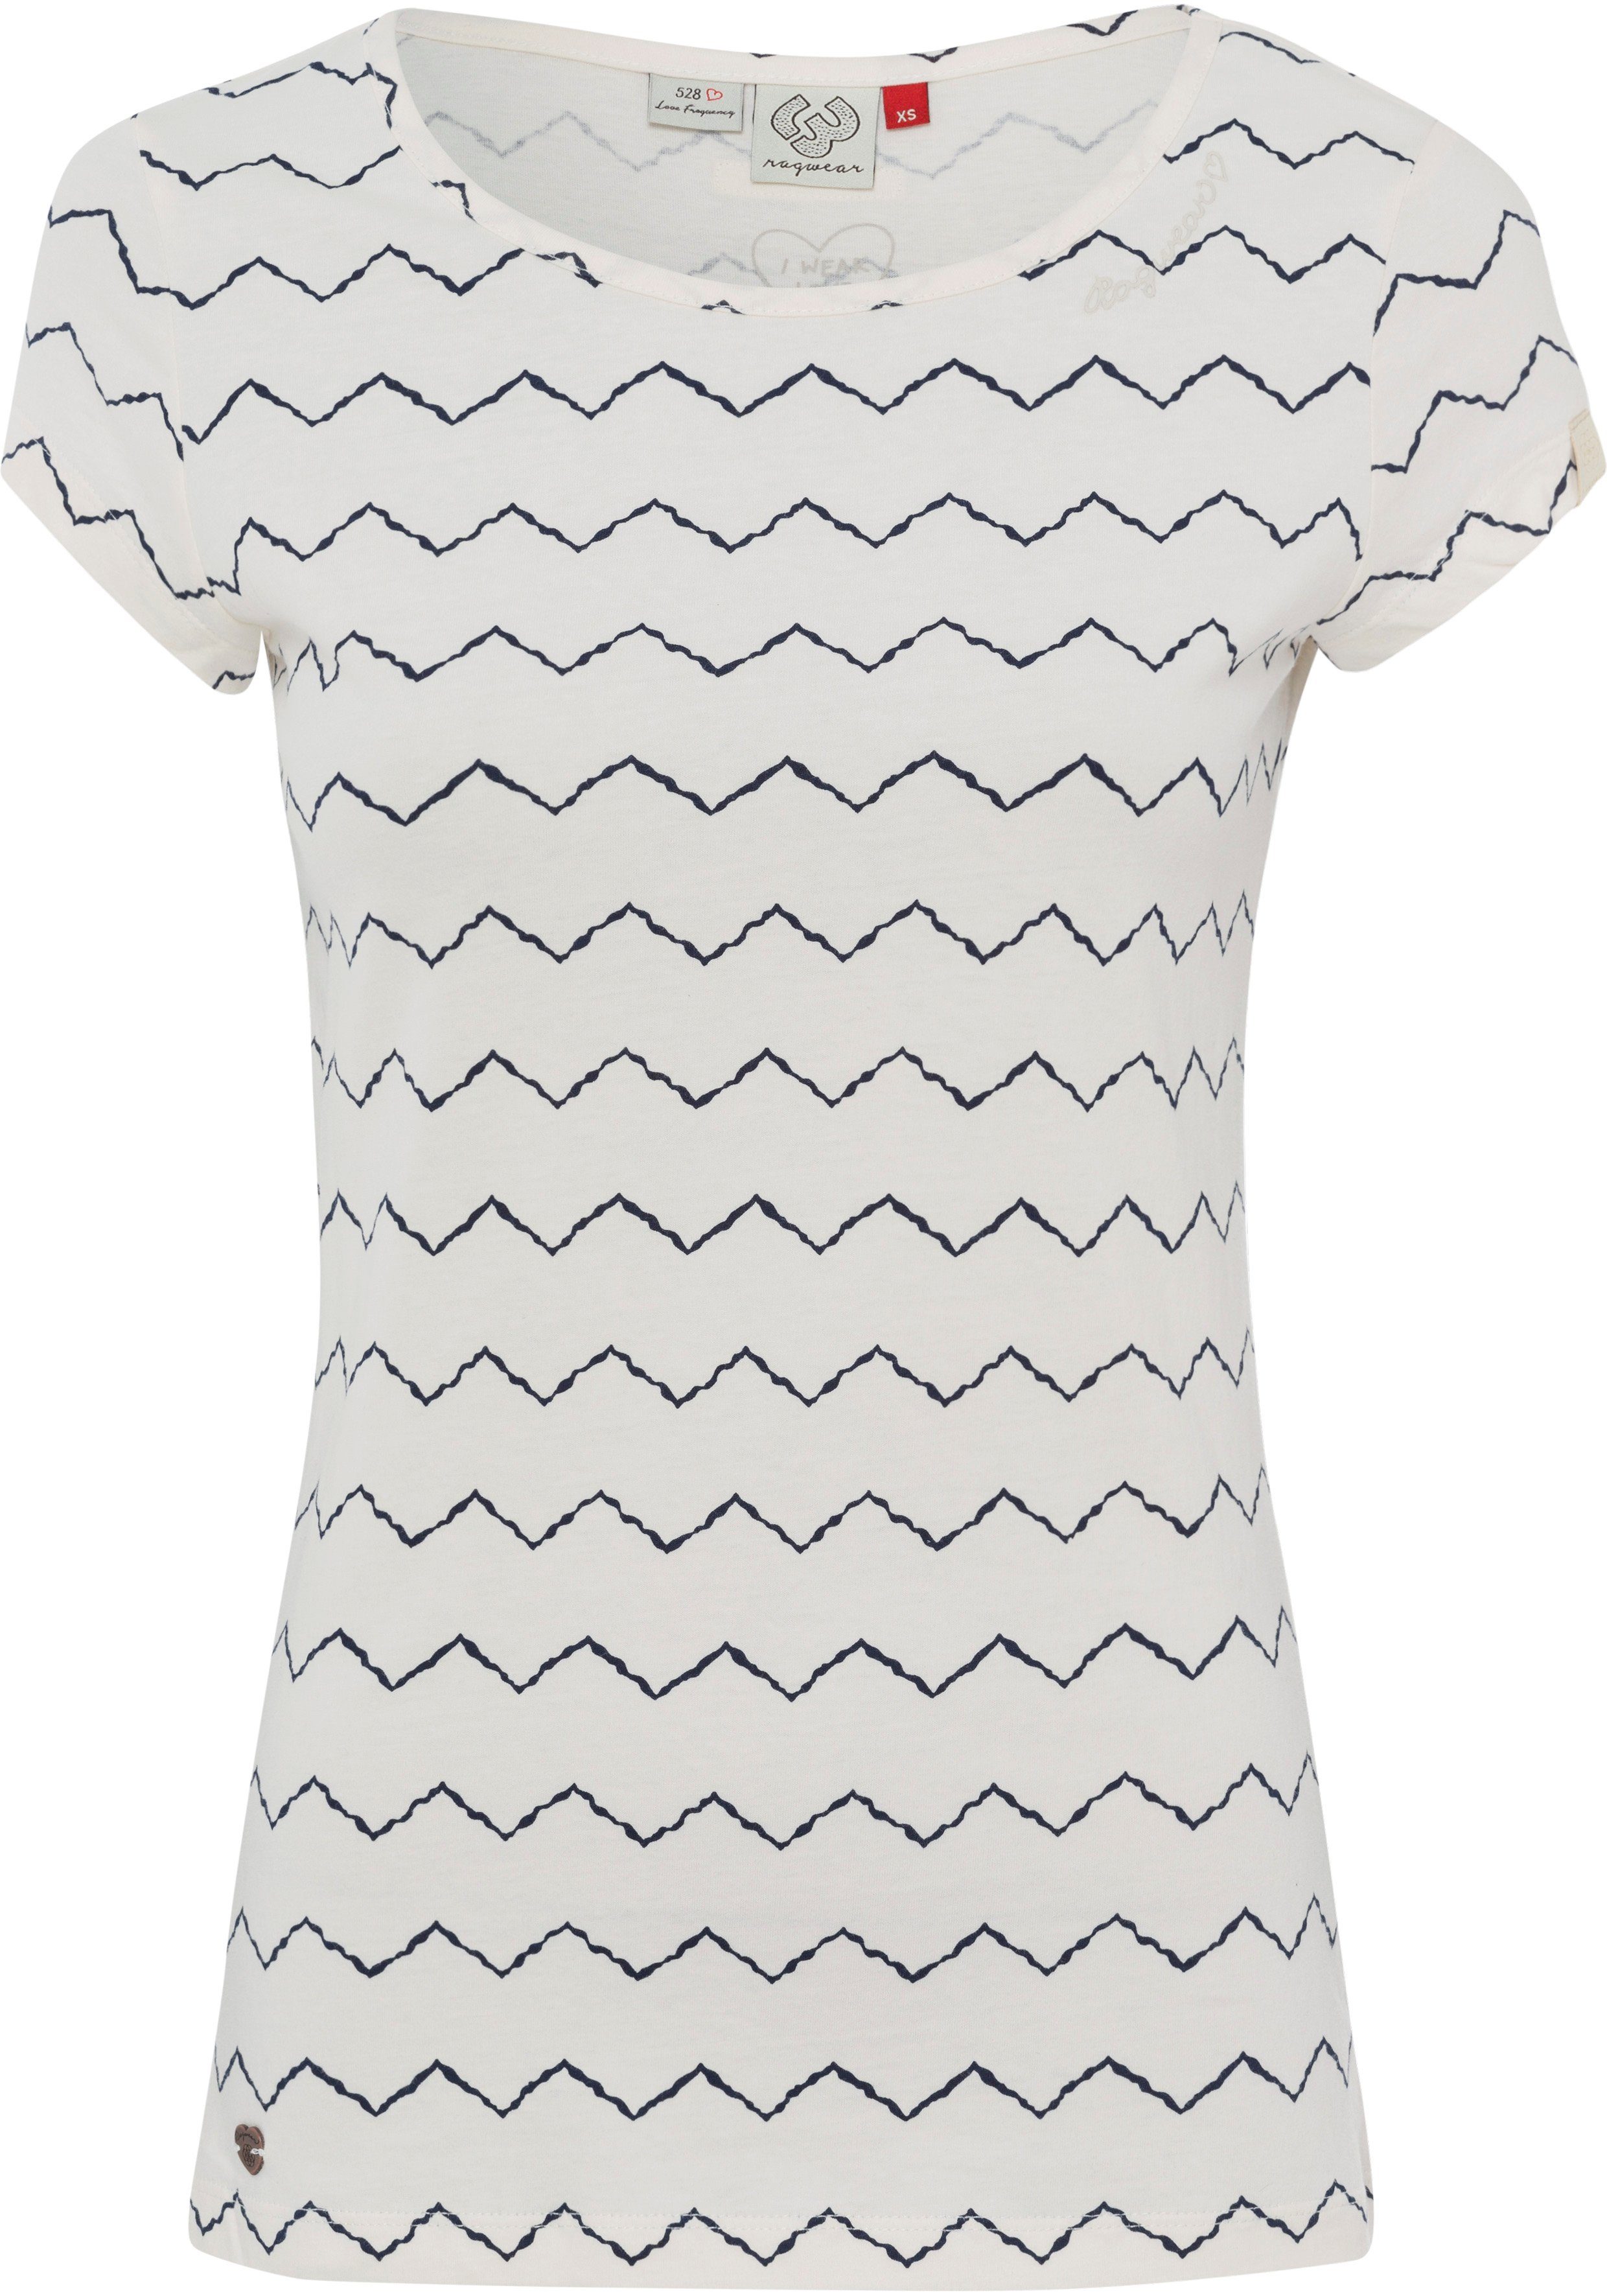 Ragwear T-Shirt MINT offwhite Allover-Print-Design im ZIG Zag ZAG 7008 Zig